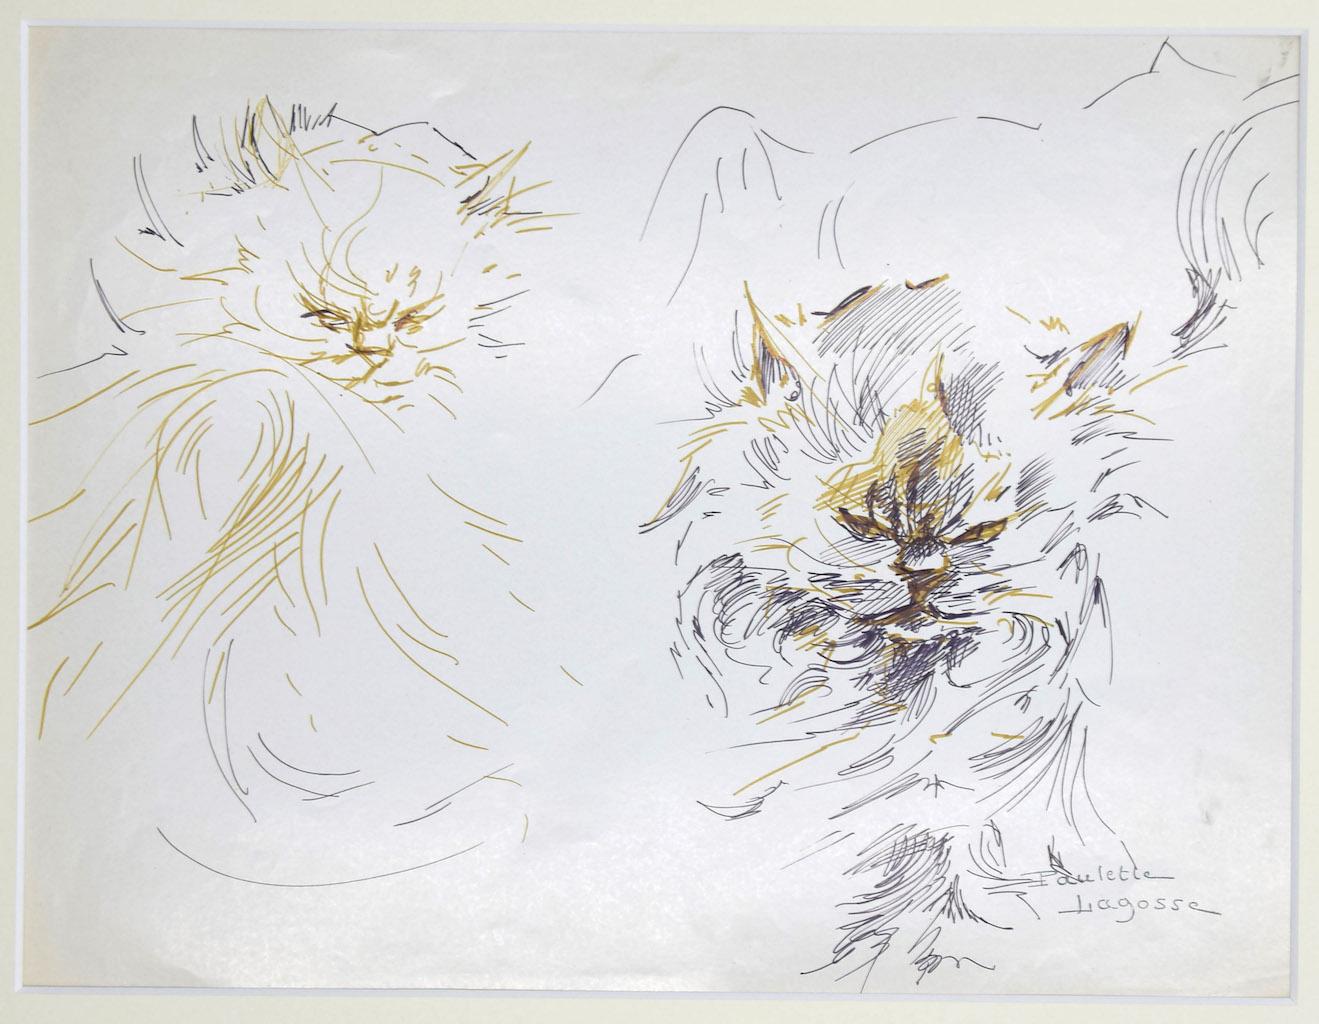 Marie Paulette Lagosse Animal Art - The Cats - Pen on Paper by M. P. Lagosse - 1970s